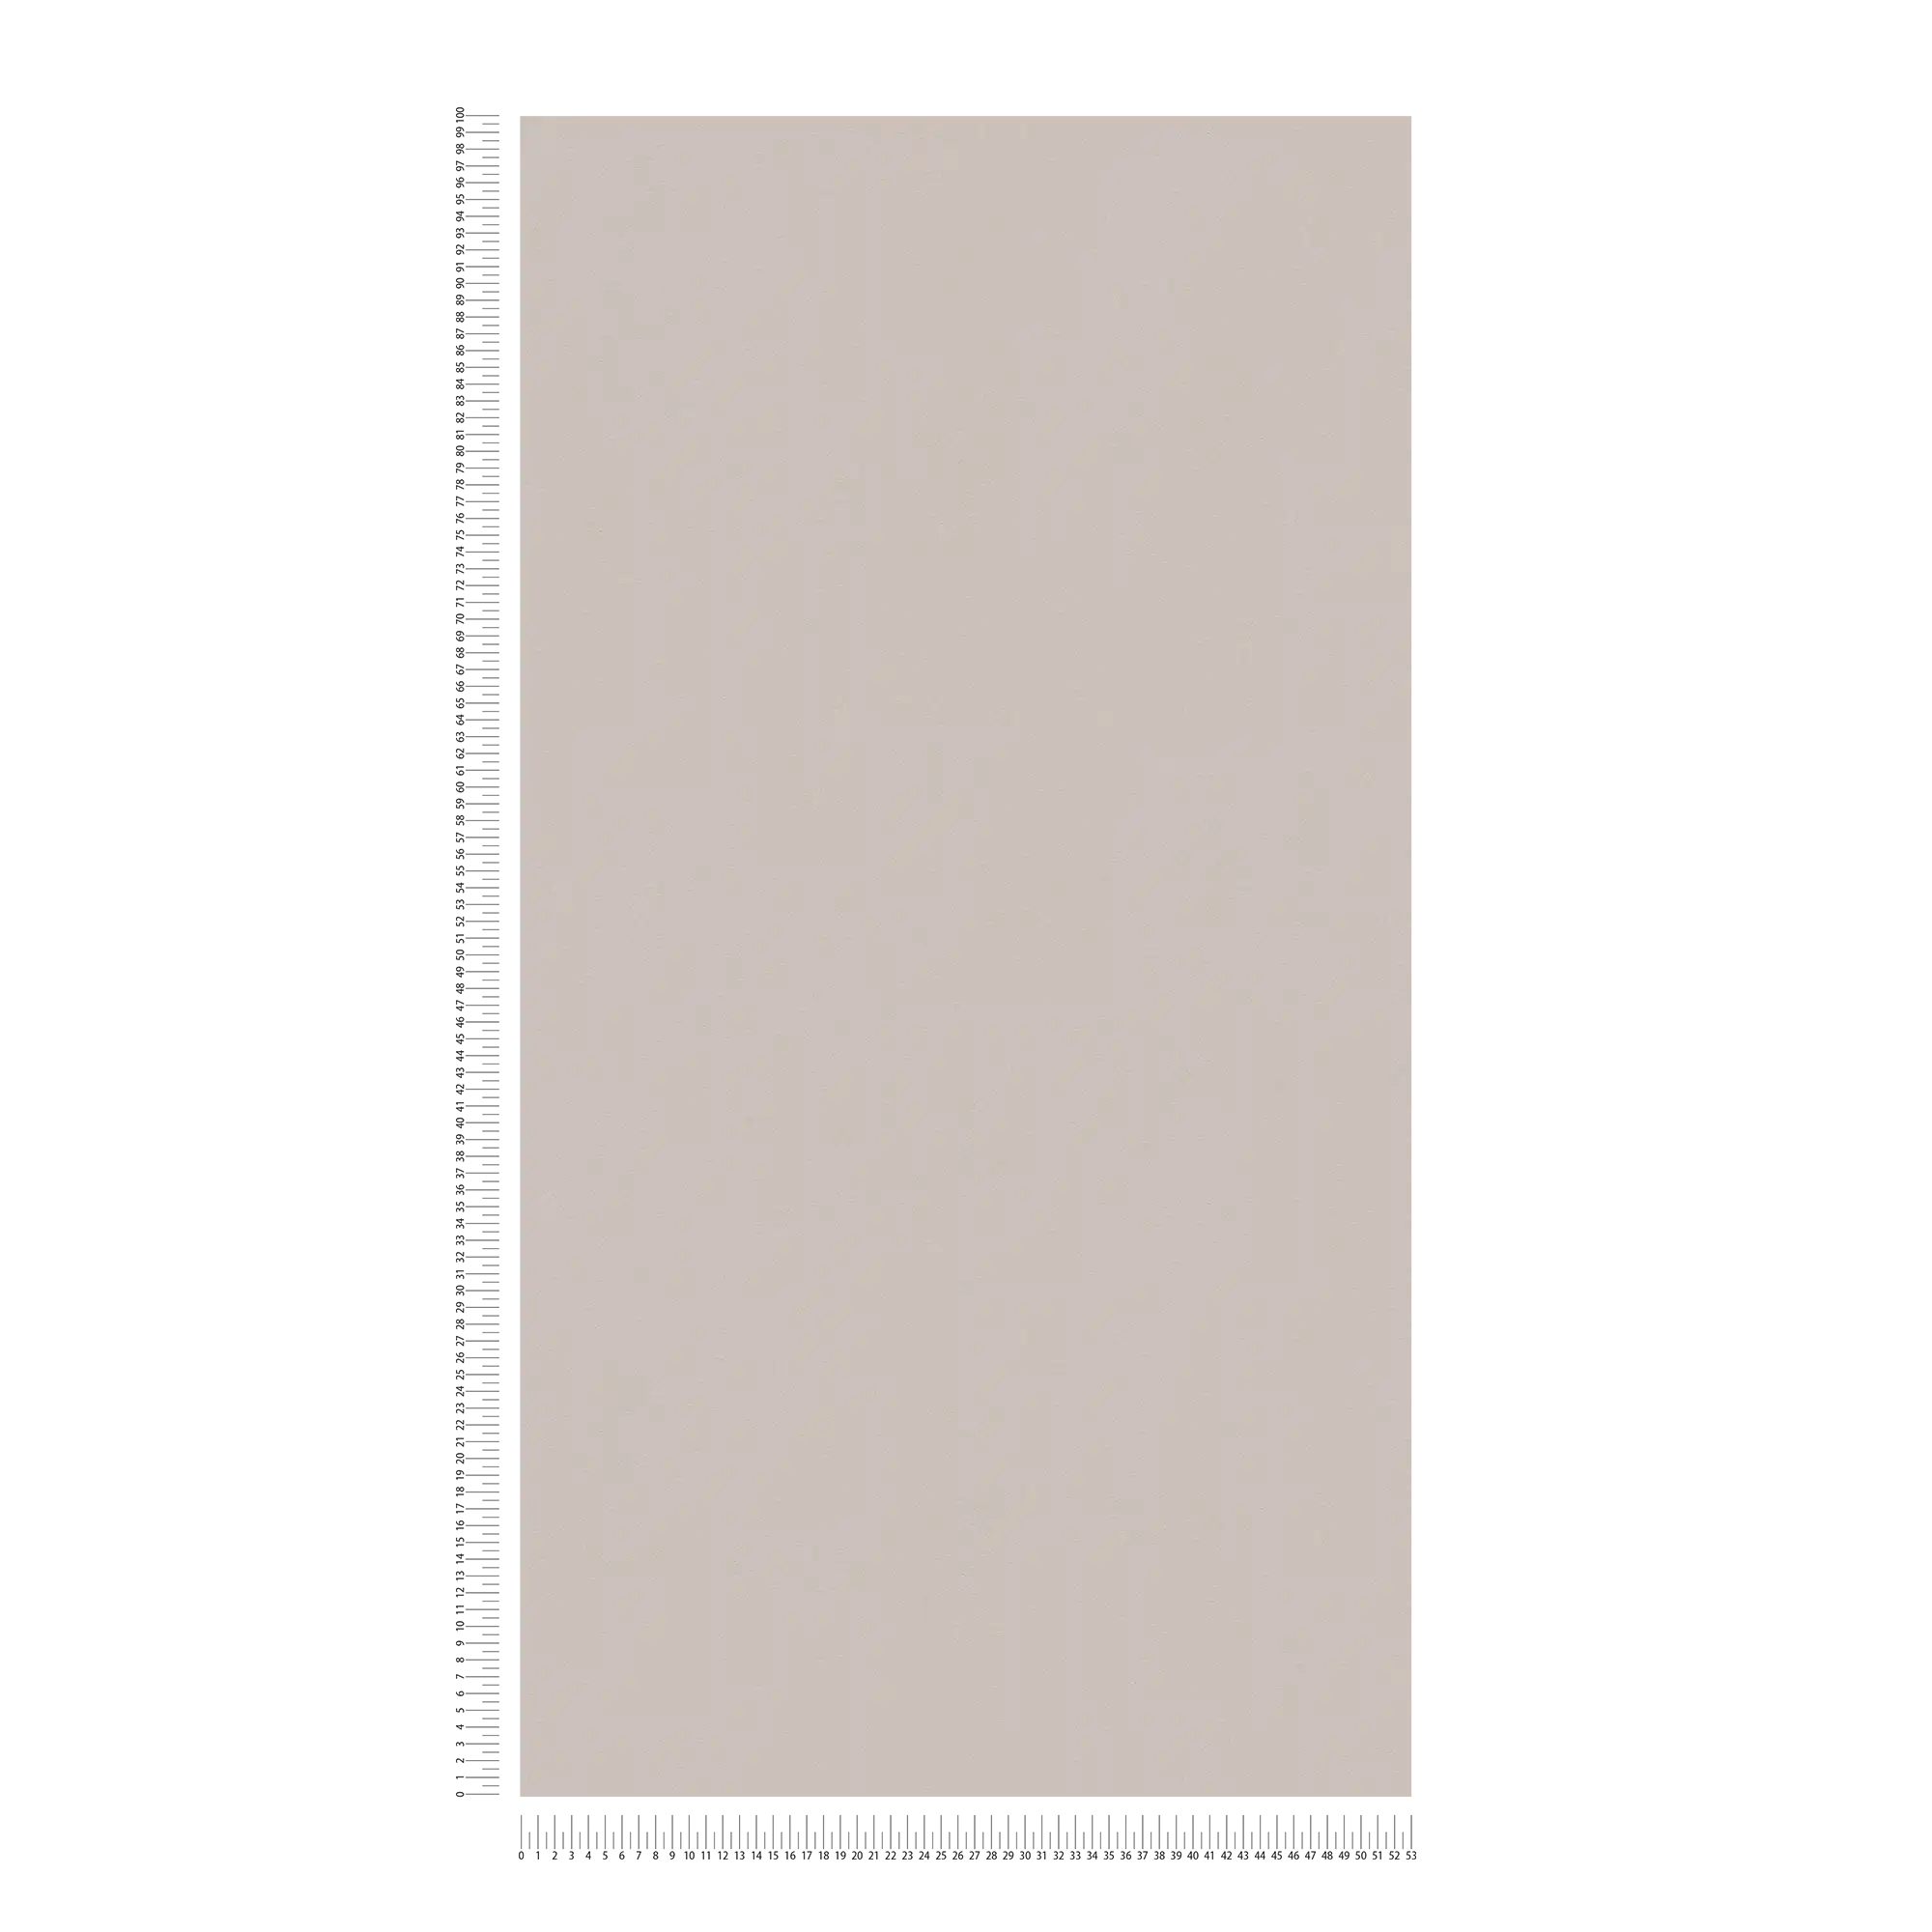             Non-woven wallpaper plain, matte, neutral earth tone - grey
        